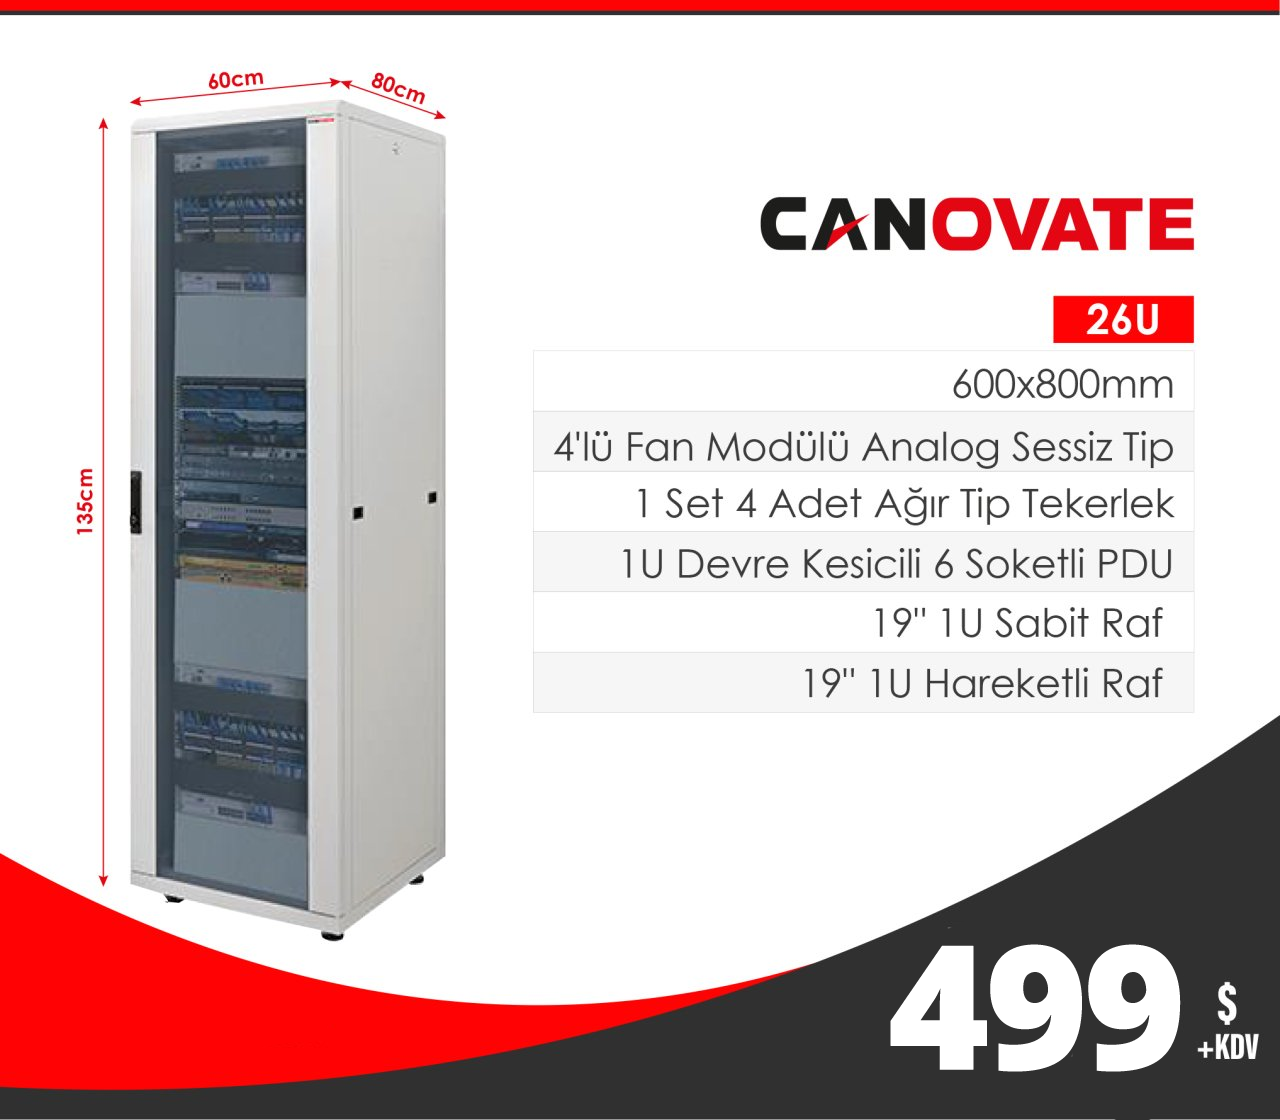 Canovate 26U 600x800 Inorax-ST Serisi Dikili Tip 19'' Network Rack Kabinet